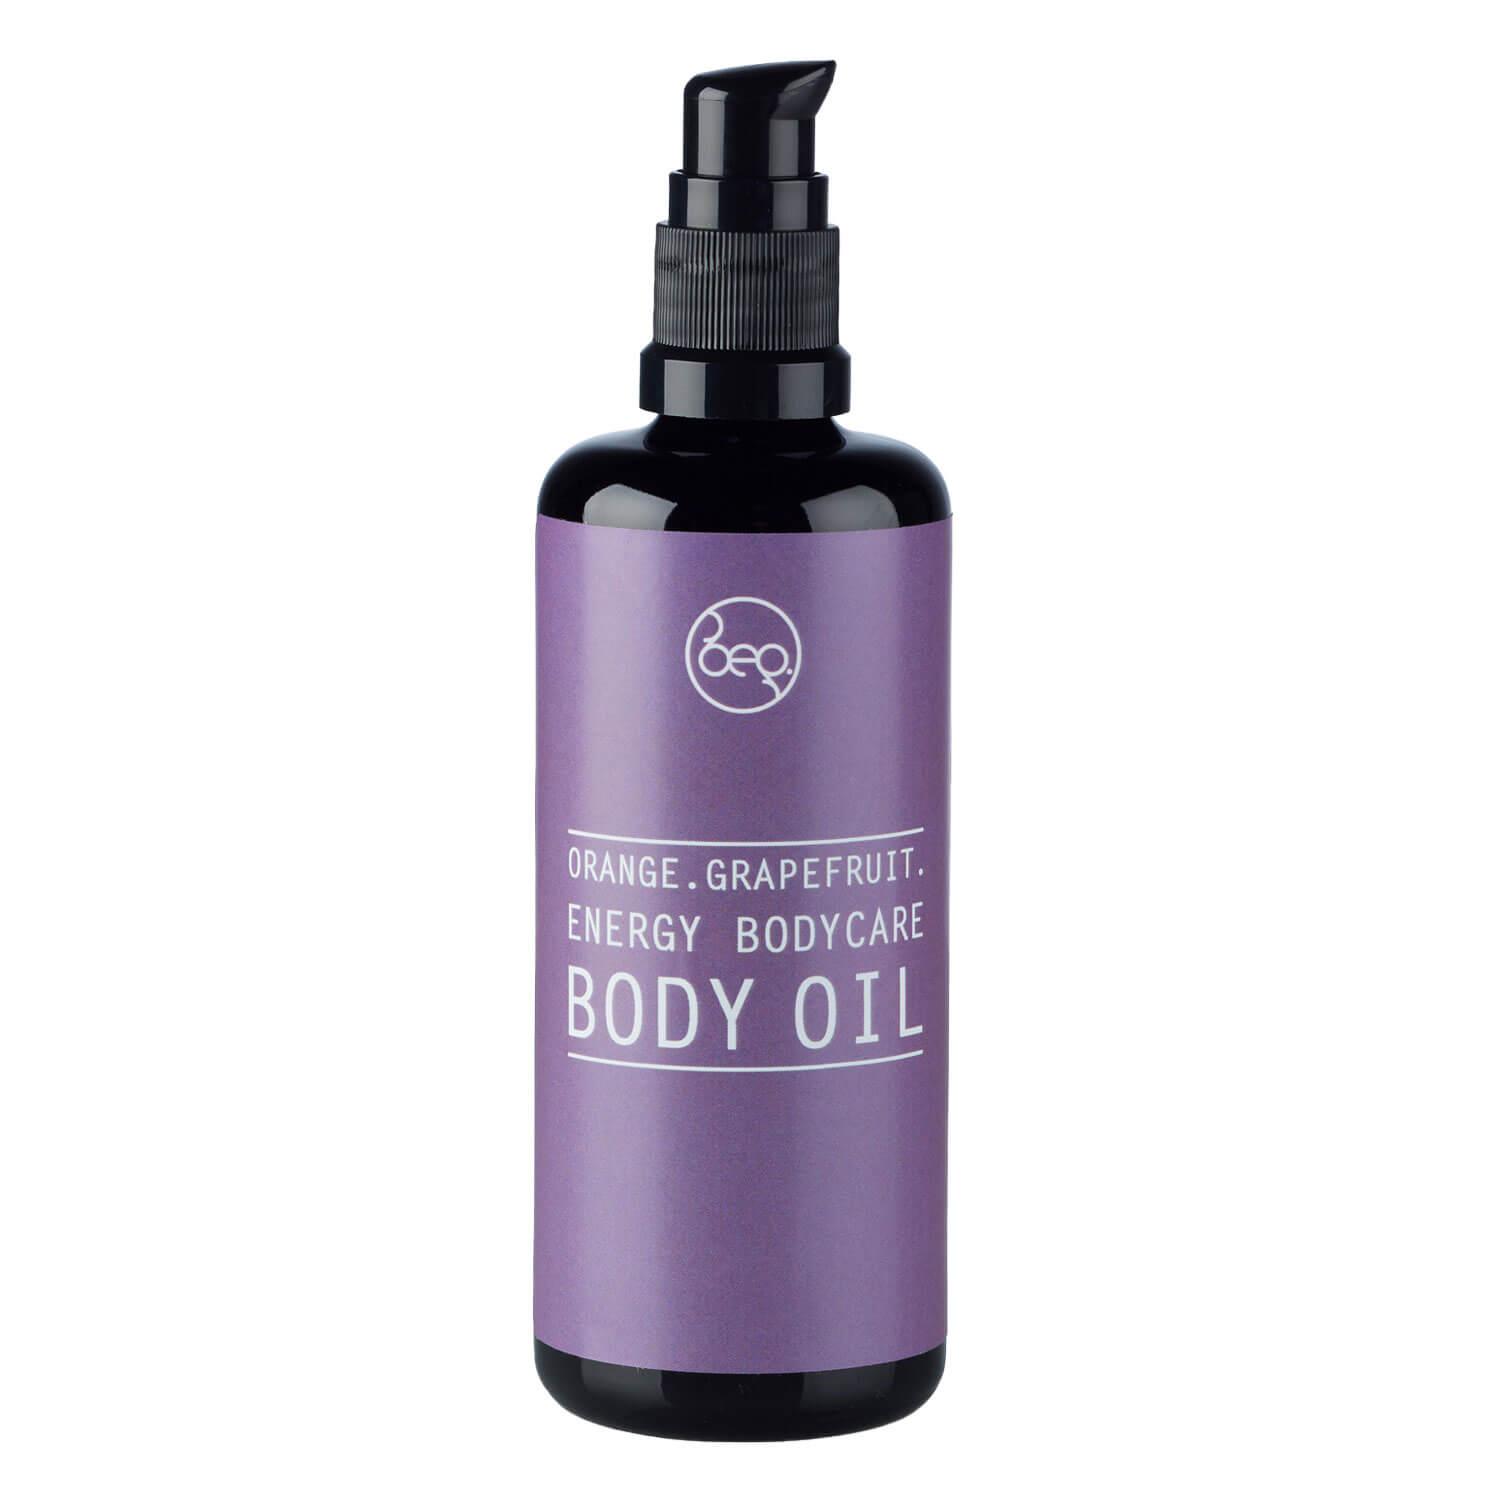 bepure - Body Oil ENERGY BODYCARE